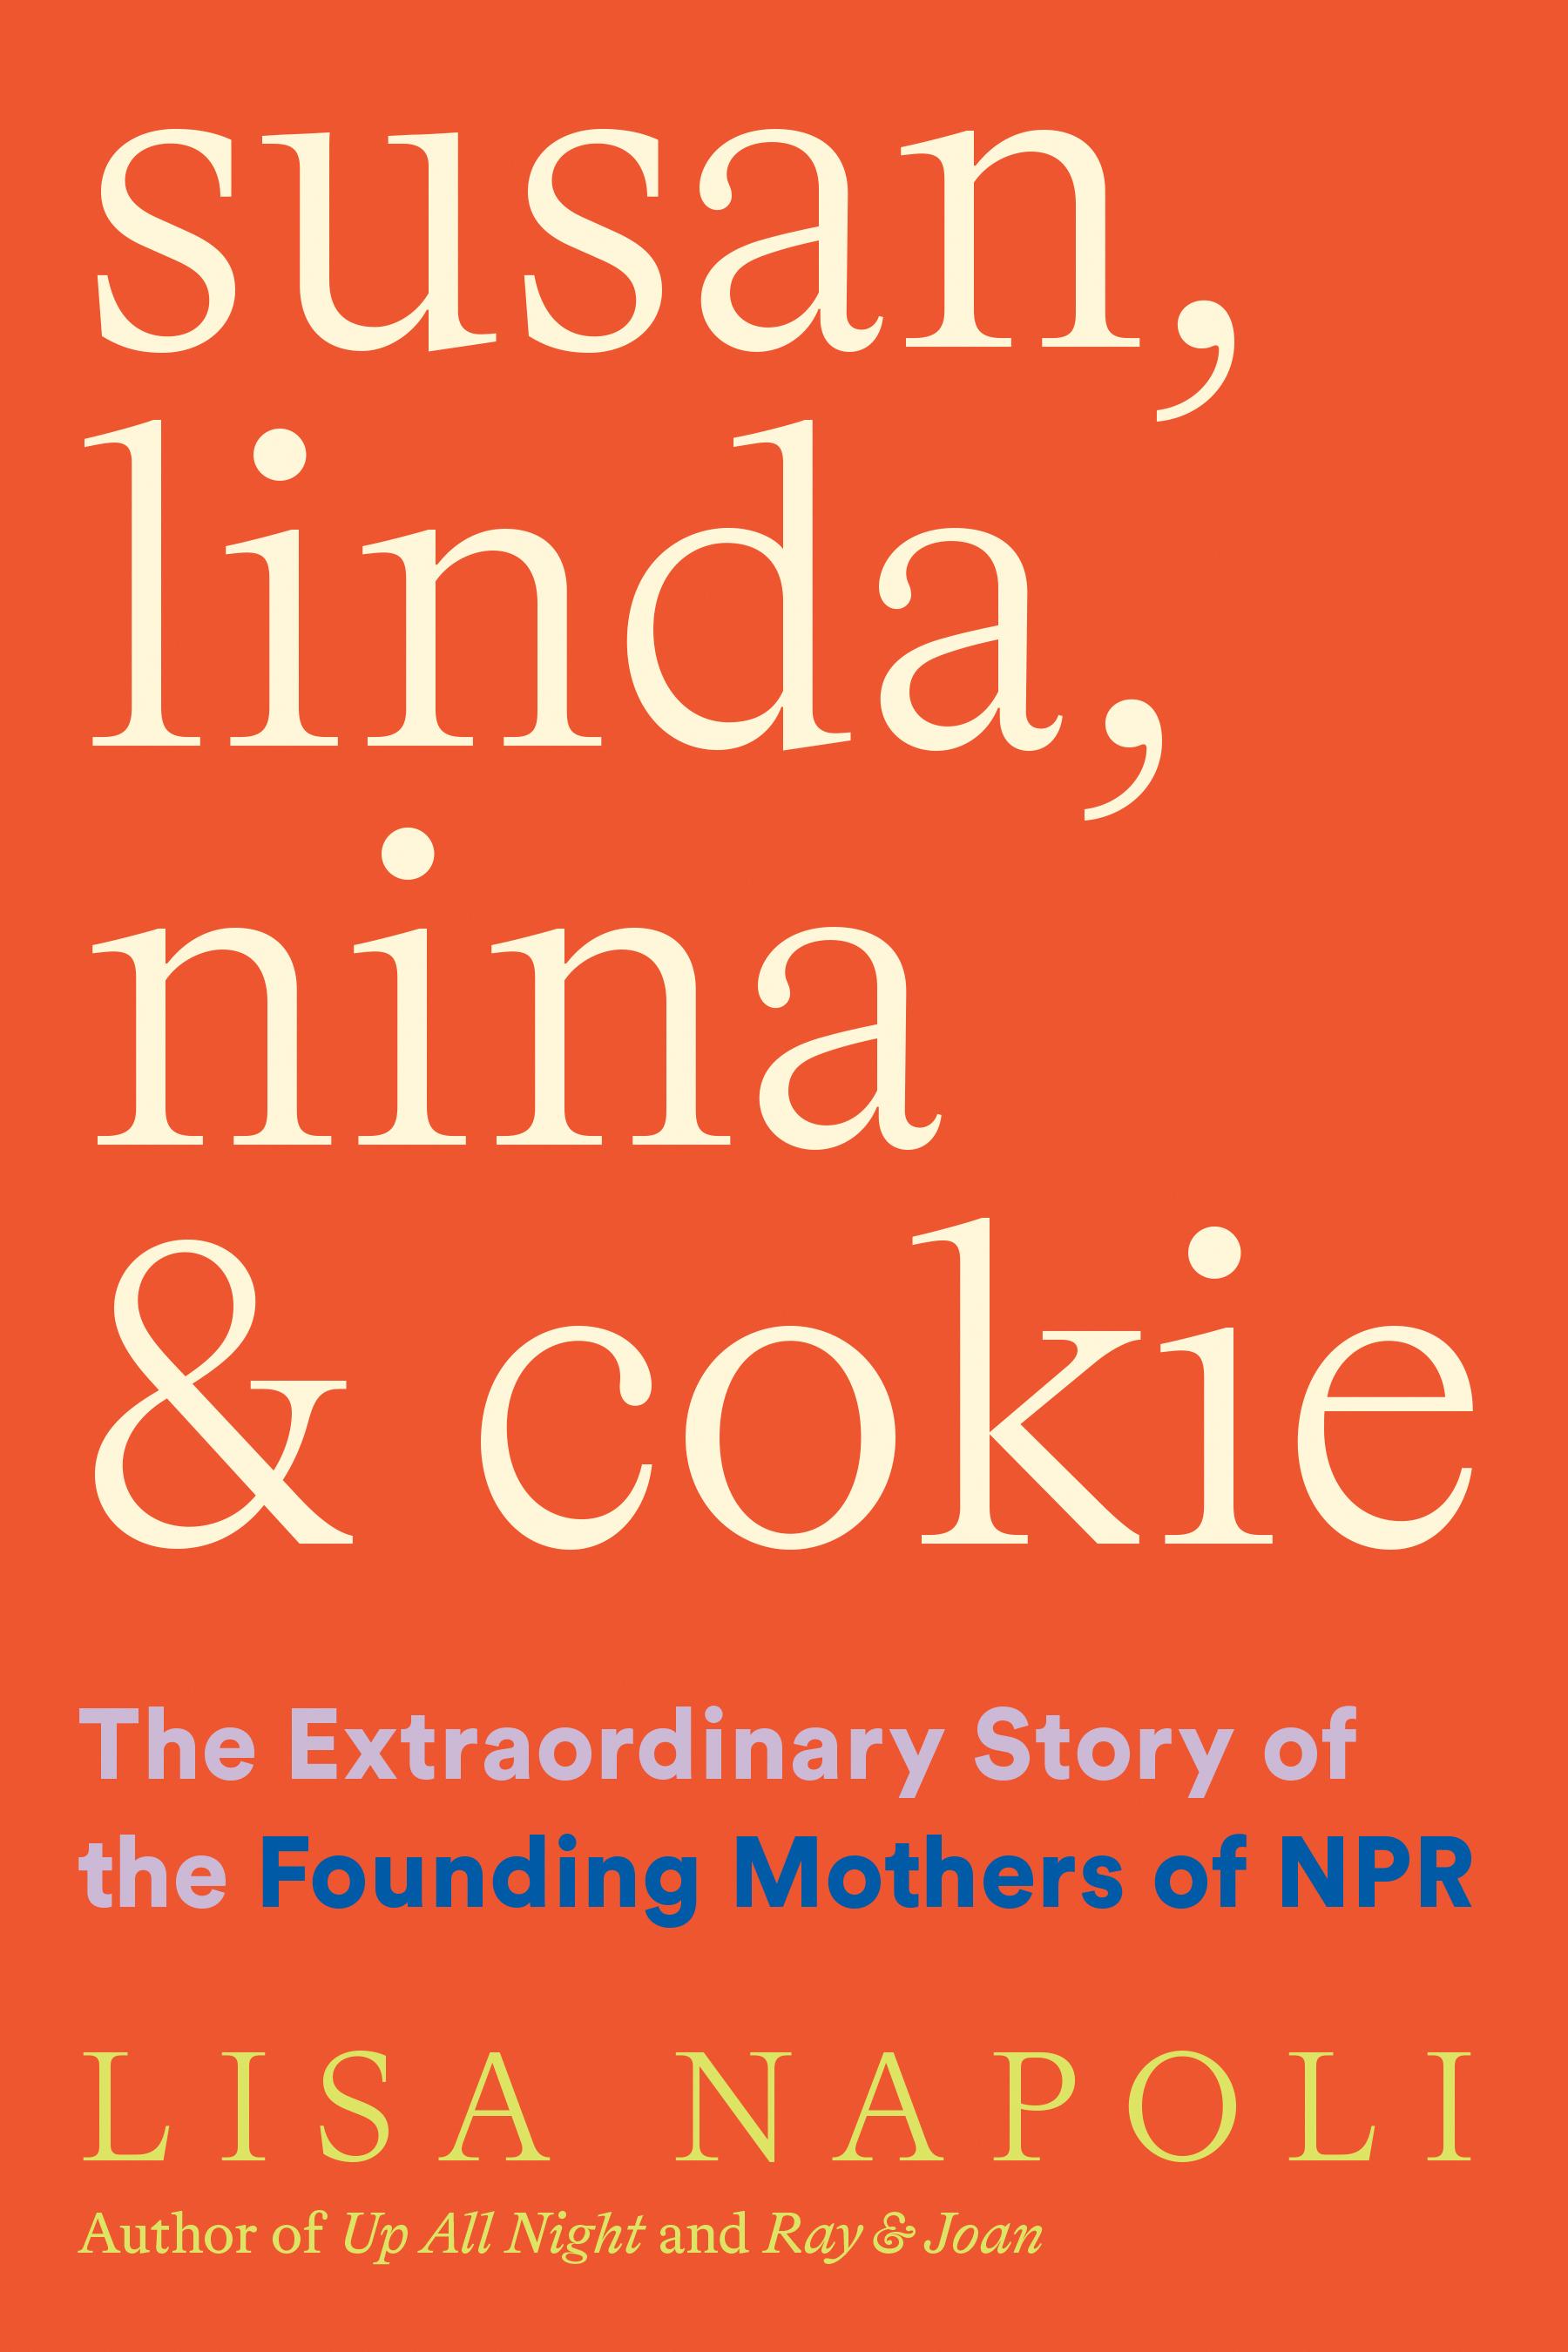 Susan, Linda, Nina & Cokie / The Extraordinary Story of the Founding Mothers of NPR / Lisa Napoli / Buch / Gebunden / Englisch / 2021 / Harry N. Abrams / EAN 9781419750403 - Napoli, Lisa